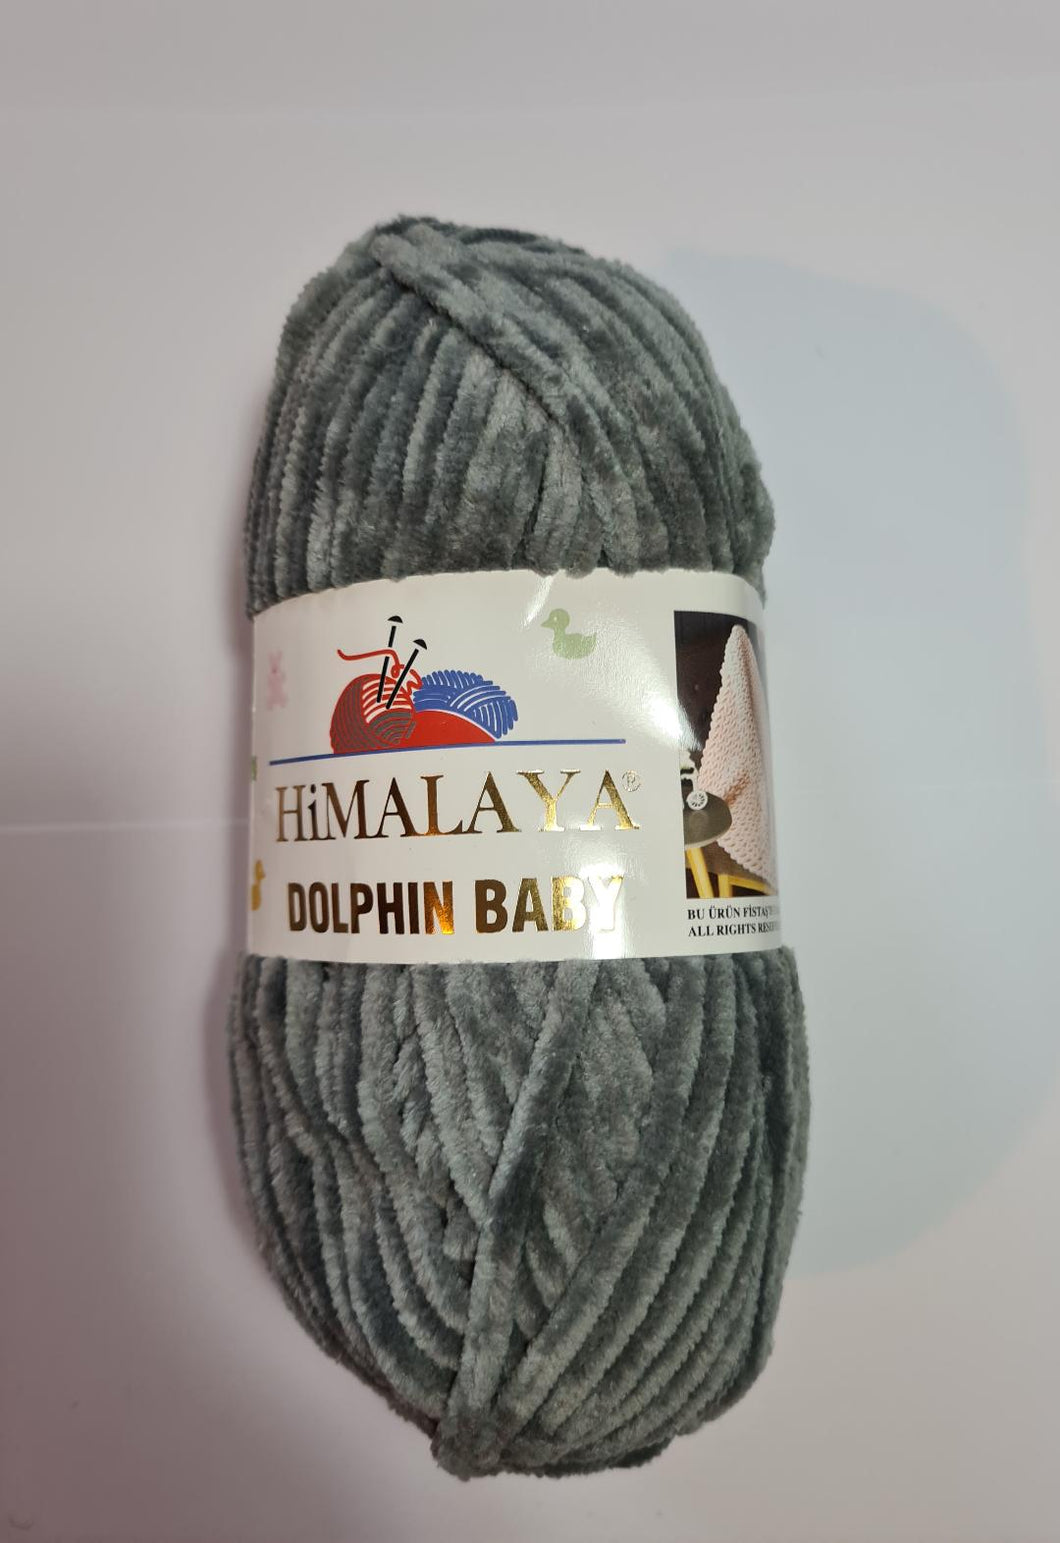 Himalaya Dolphin Baby (Grey - 80320) Knitting and Crochet Yarn